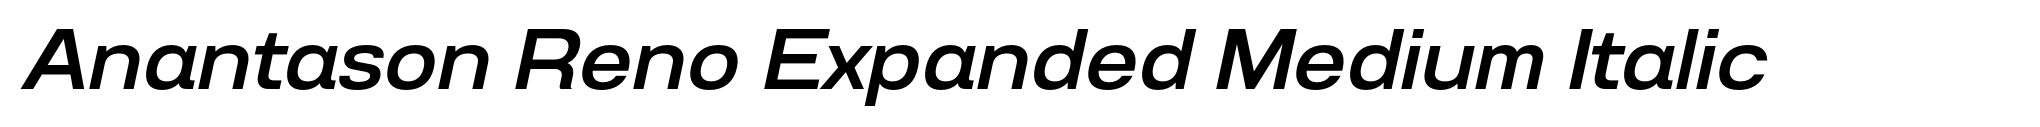 Anantason Reno Expanded Medium Italic image